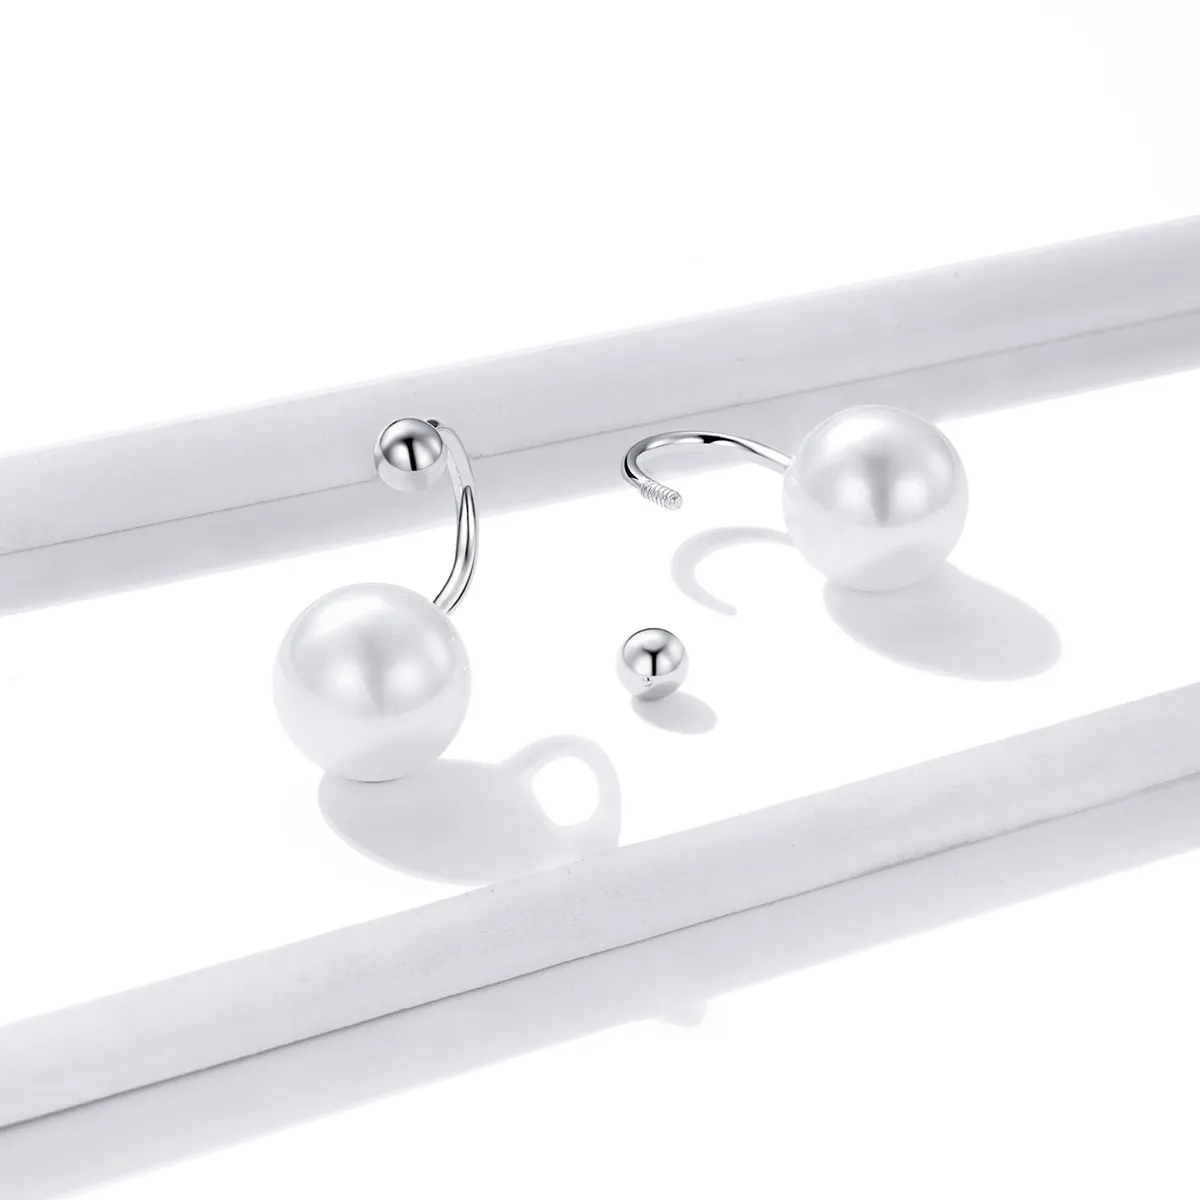 Pandora Style Silver simple pearl Stud Earrings - BSE438